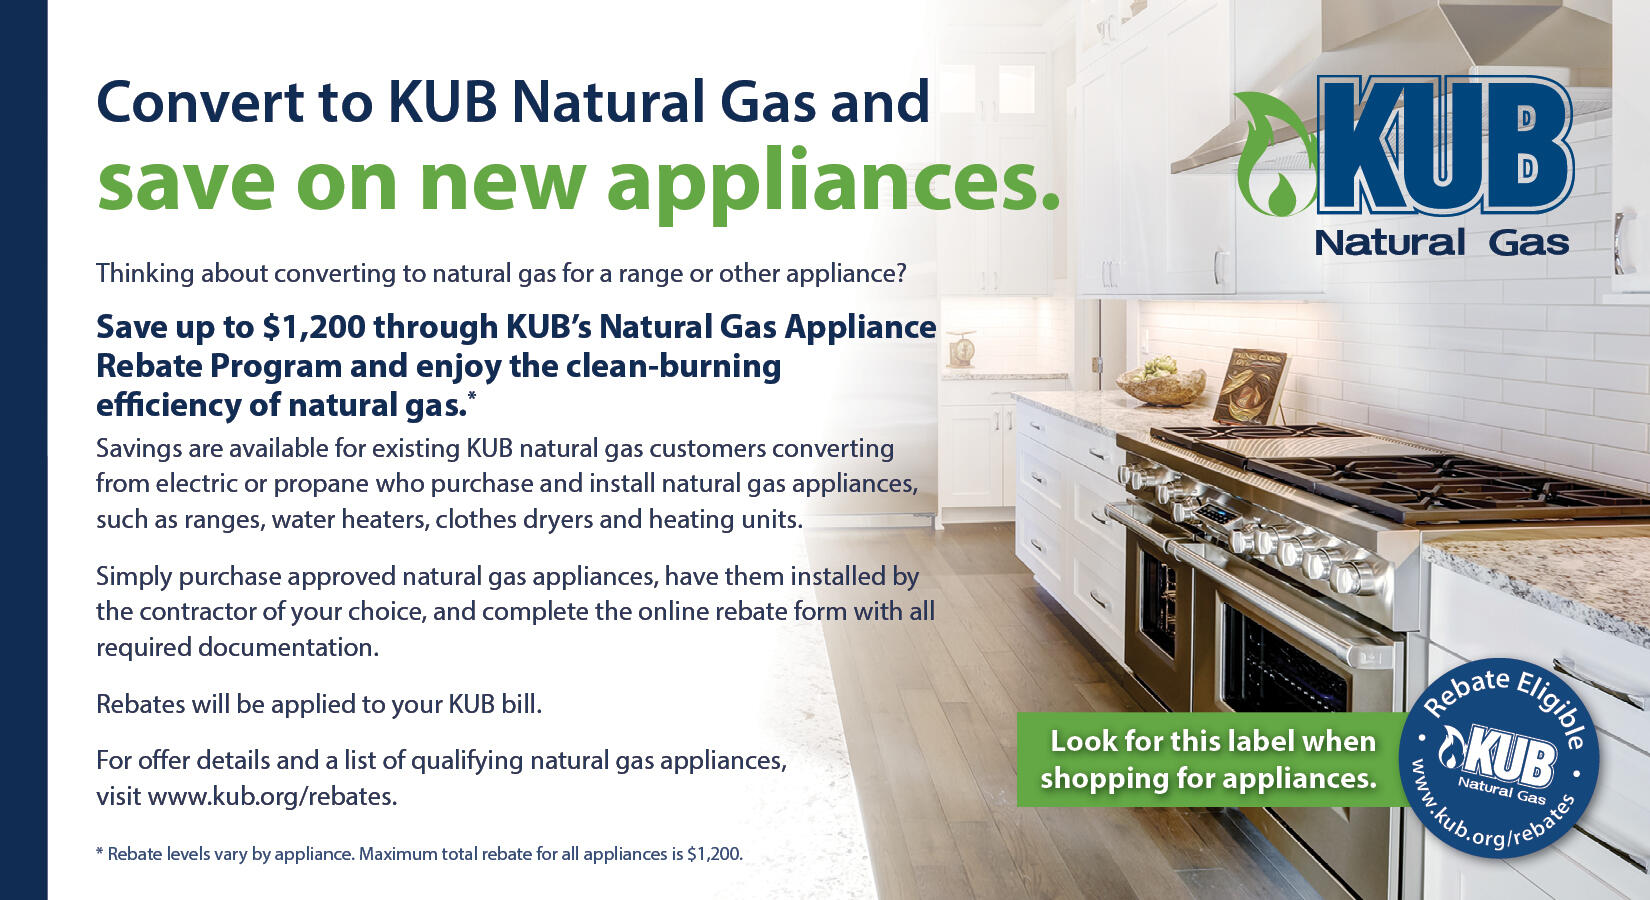 KUB Offering Appliance Rebate Program To Natural Gas Customers 